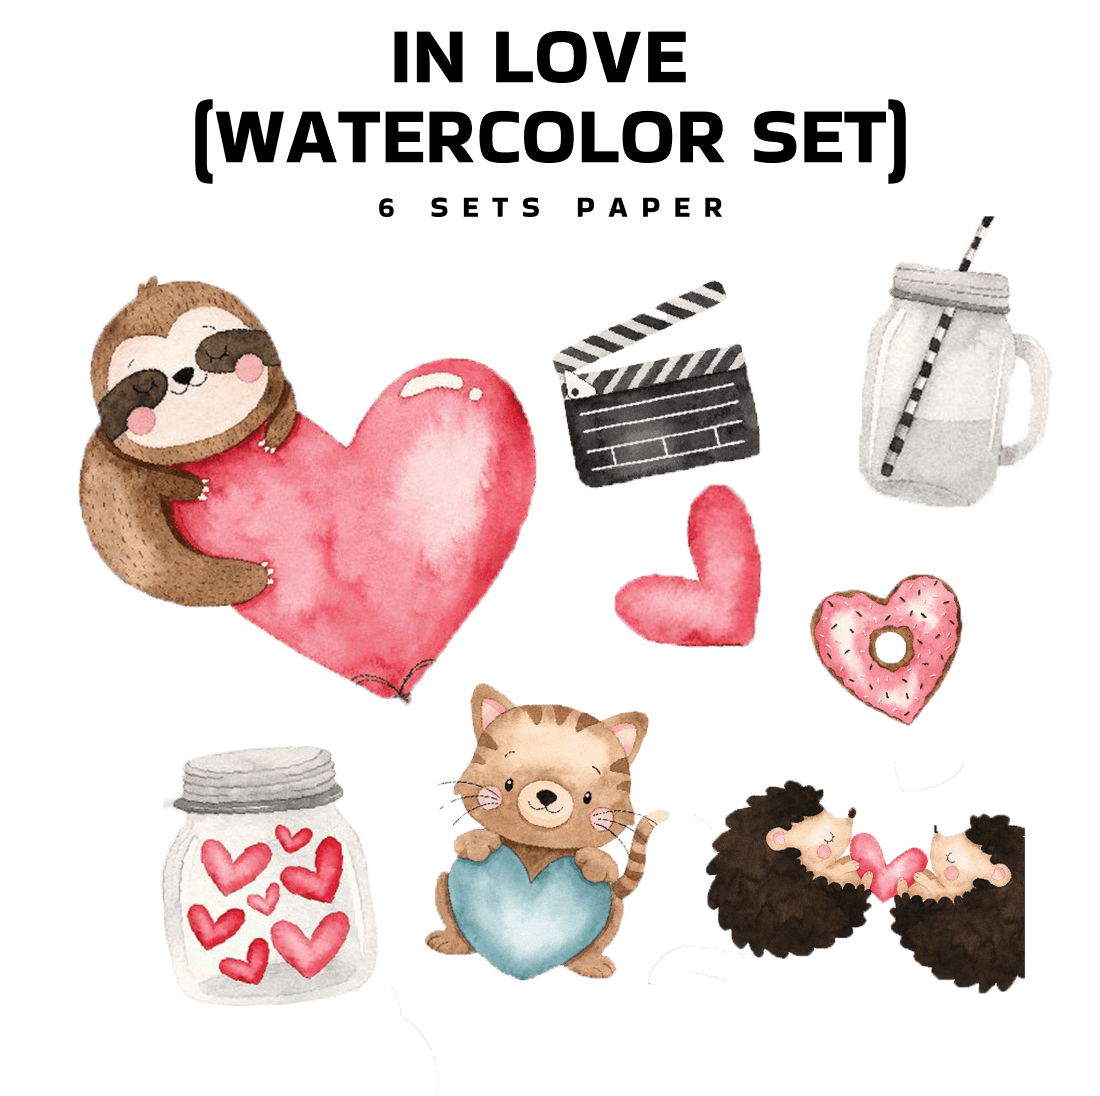 In Love (Watercolor Set) - main image preview.